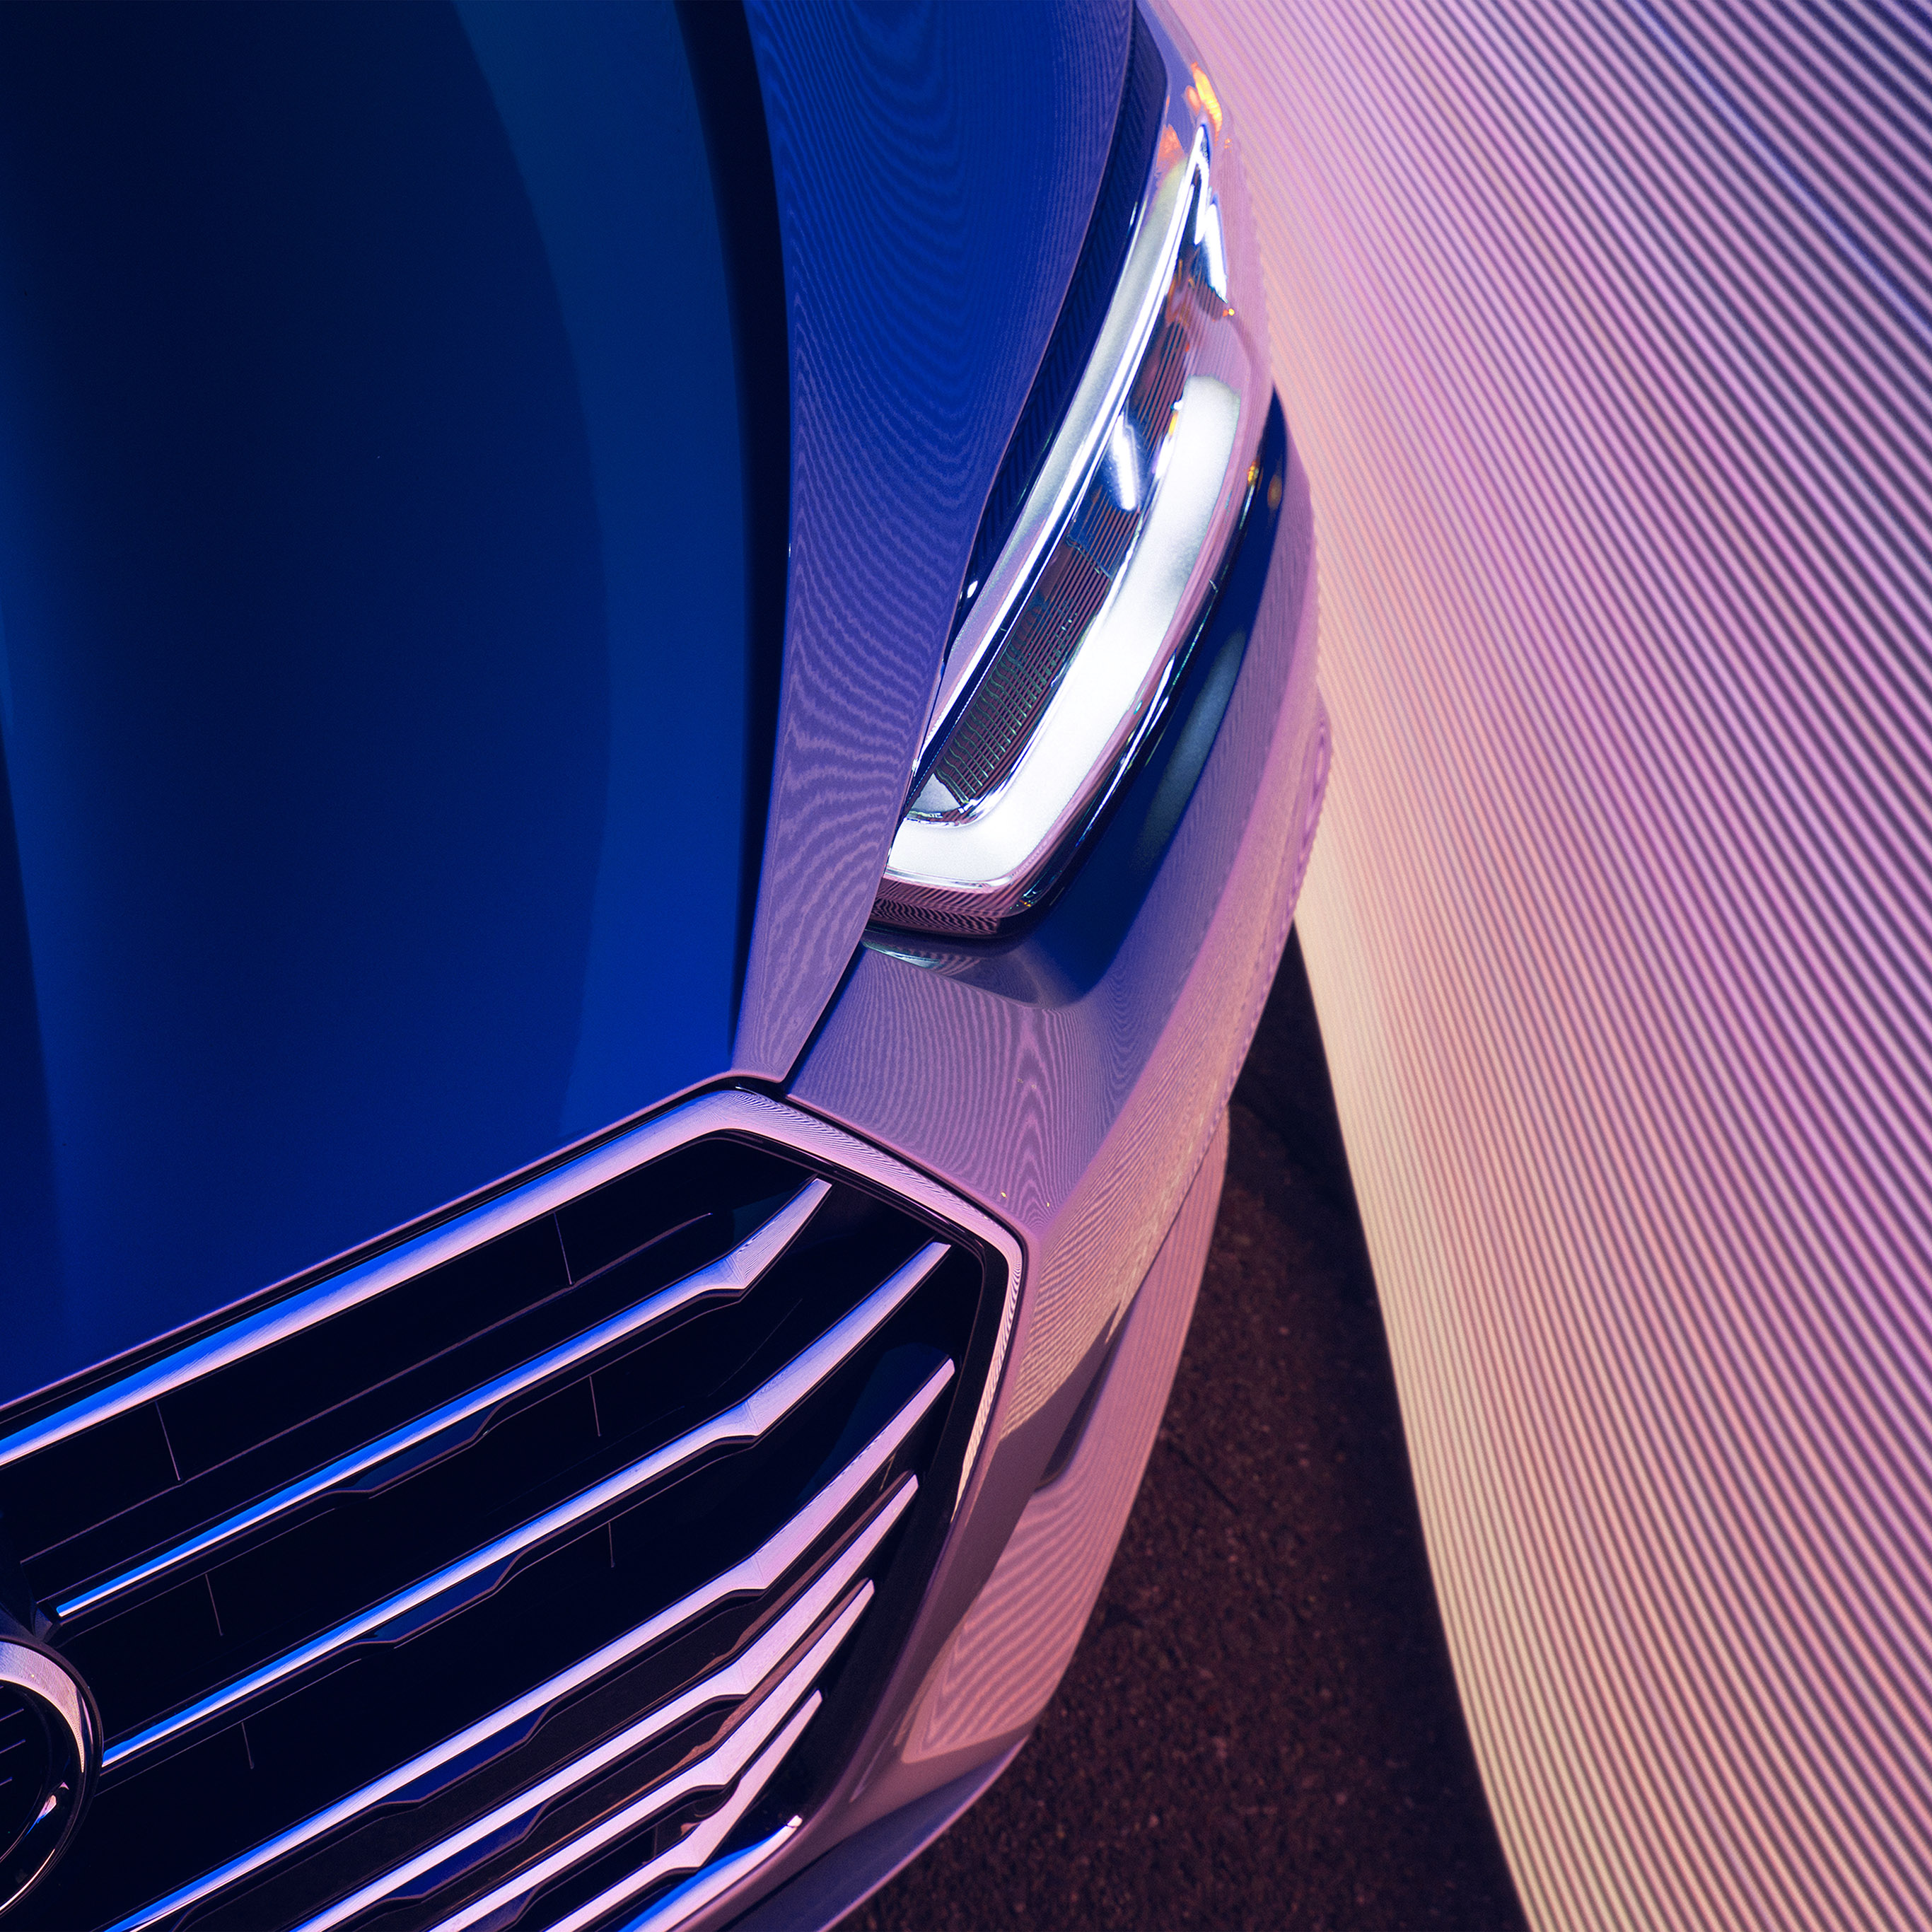 Car Headlight Audi Art Illustration Blue Pink Wallpaper